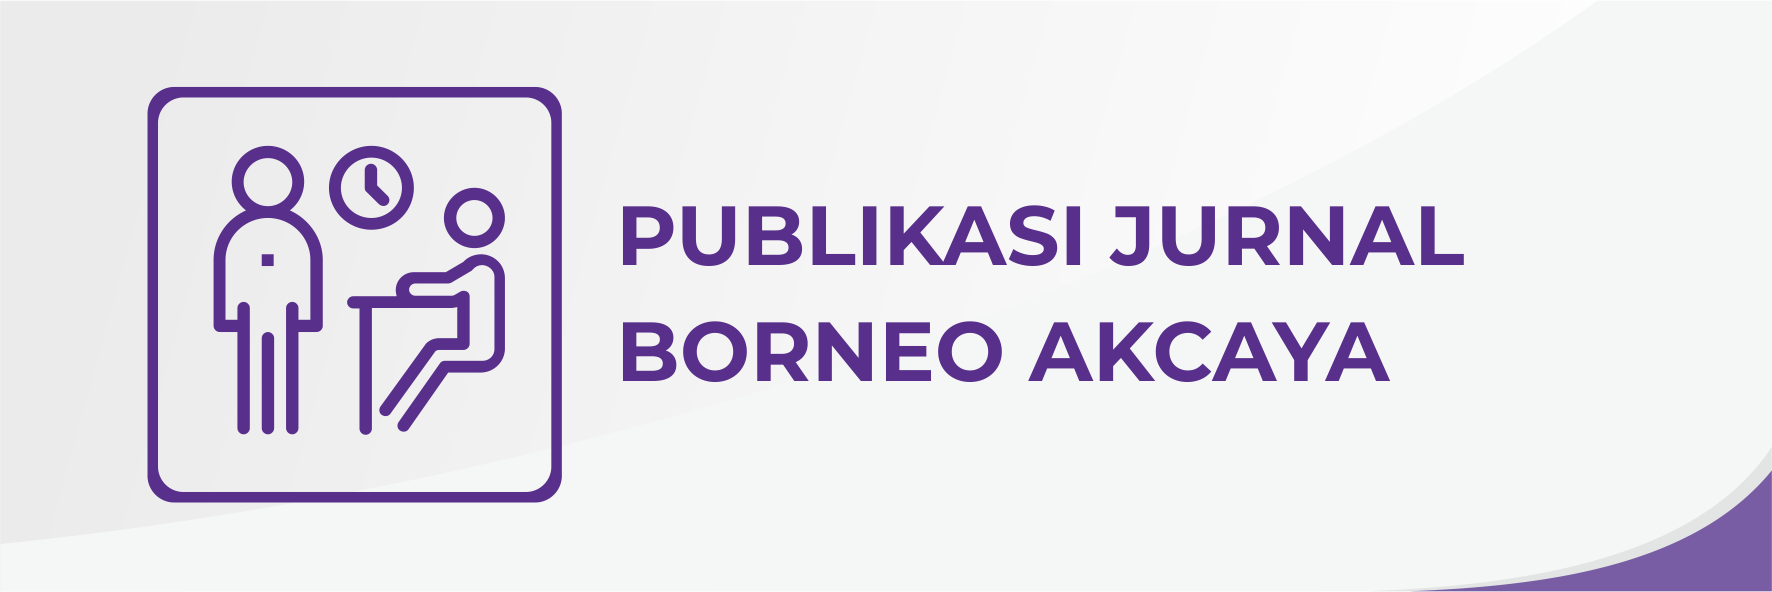 Publikasi Jurnal Borneo Akcaya